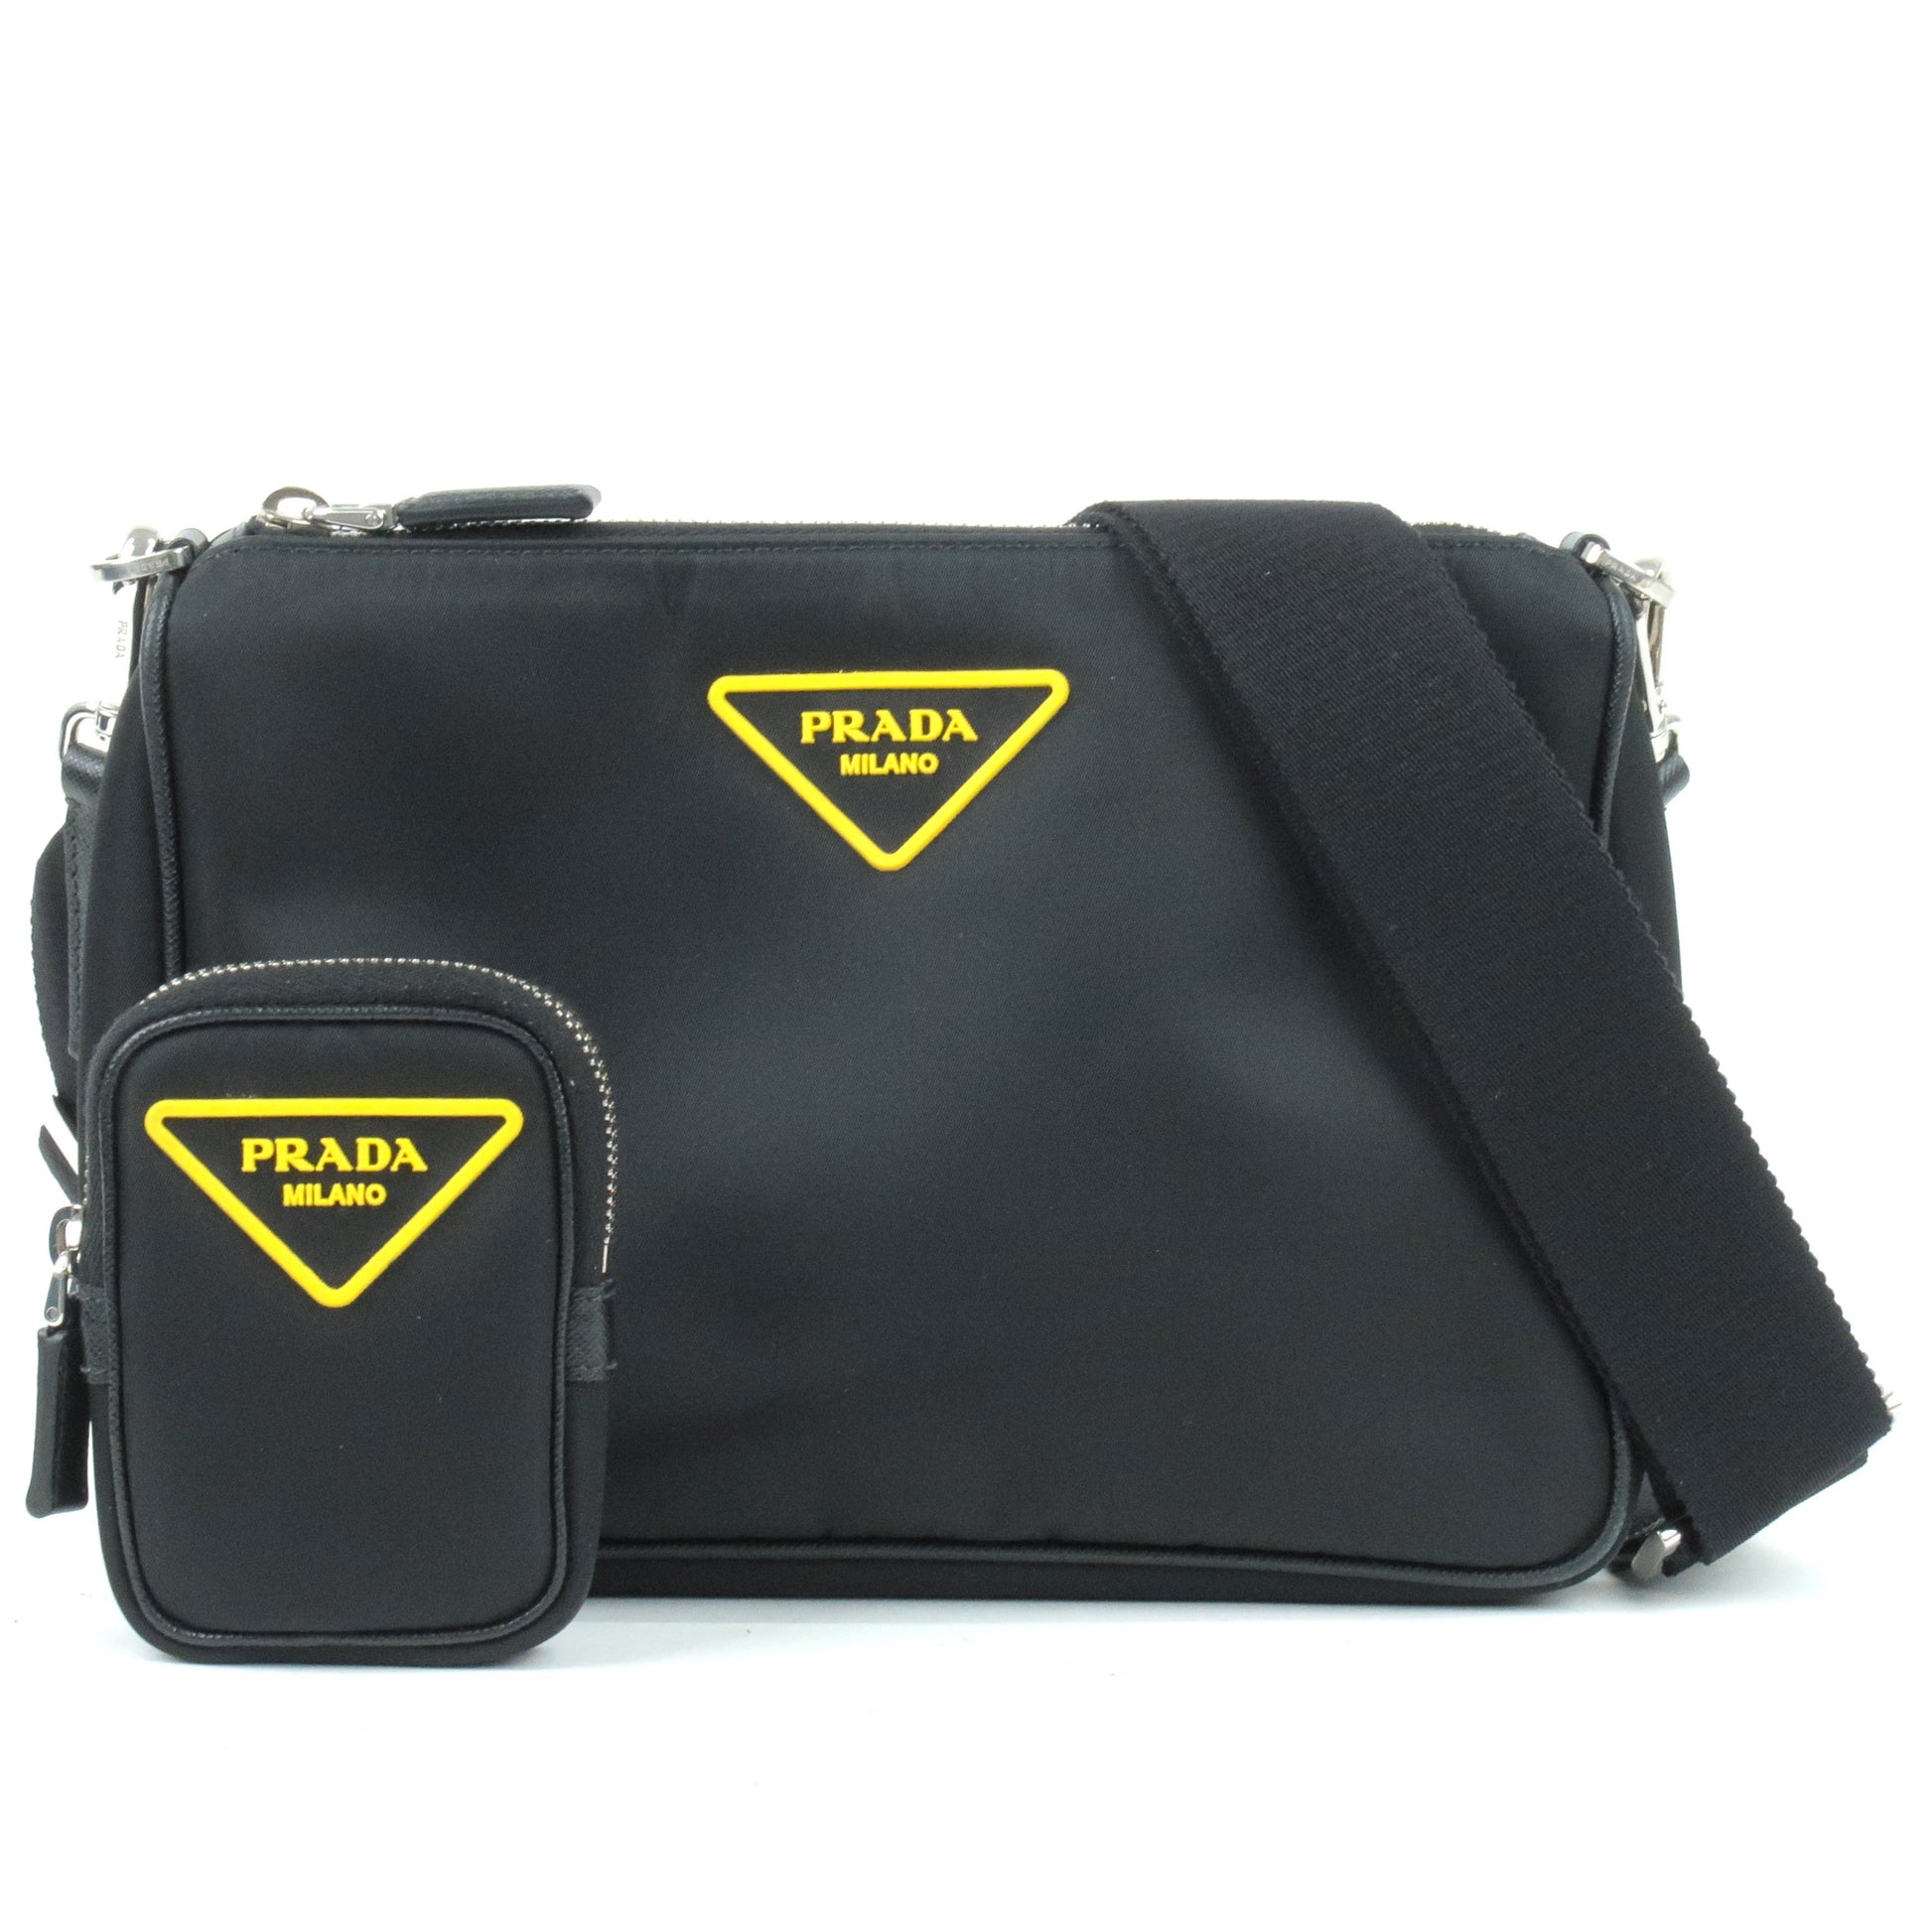 Prada - Yellow Leather Crossbody Bag